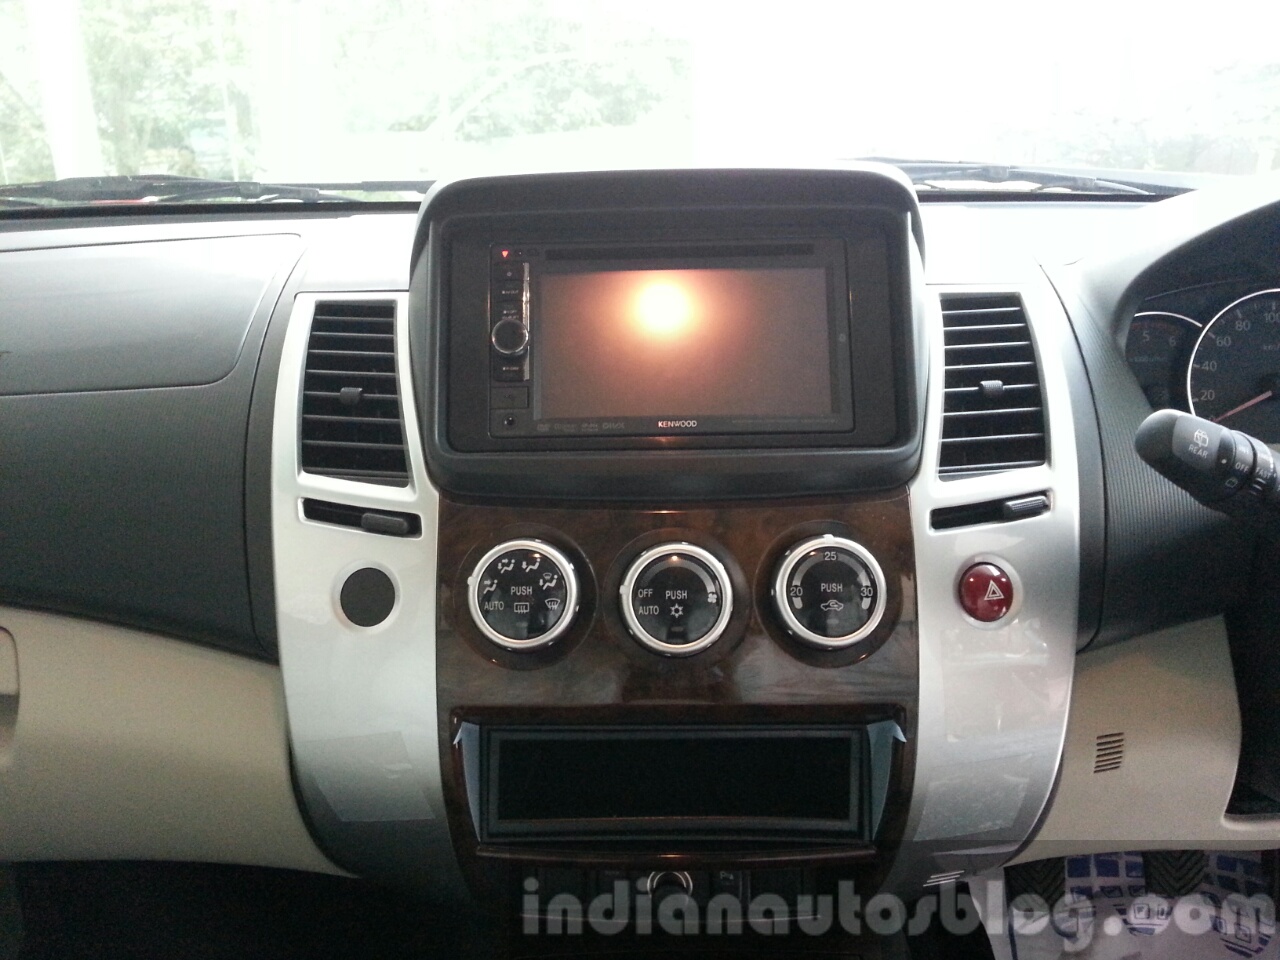 2014 Mitsubishi Pajero Sport facelift center console India